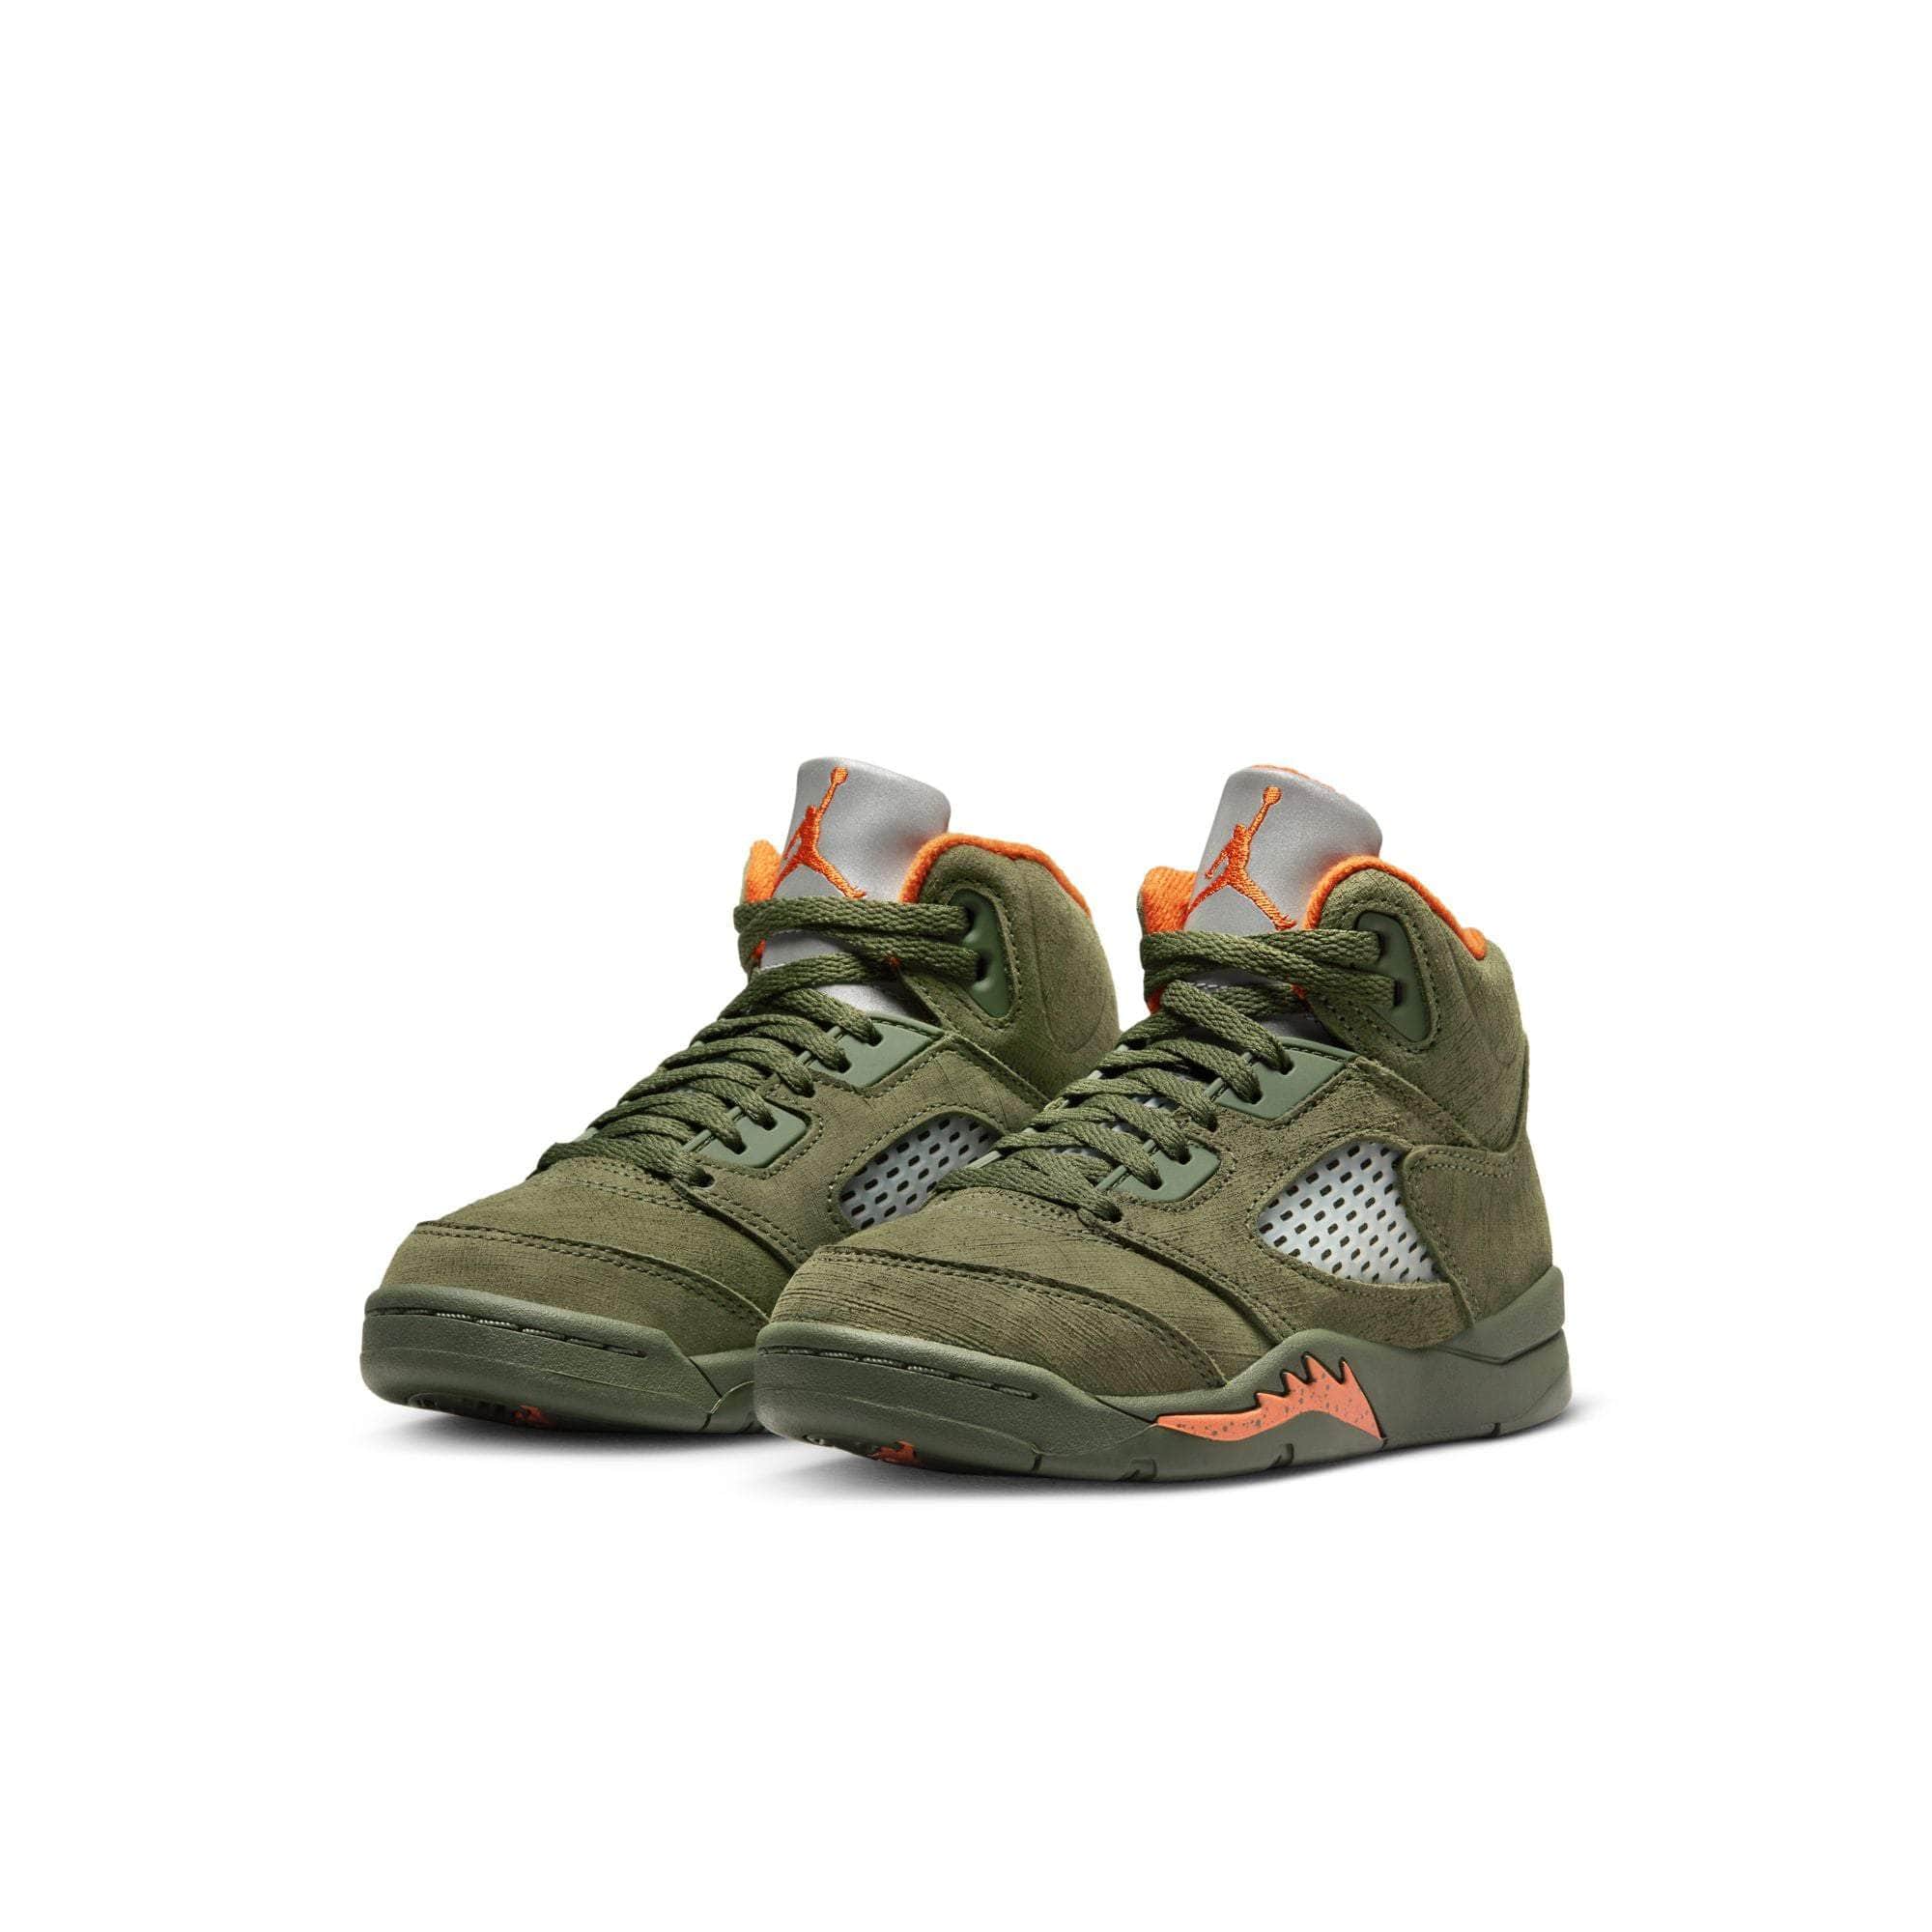 Air Jordan Footwear Air Jordan 5 Retro “Olive“ - Kid's PS